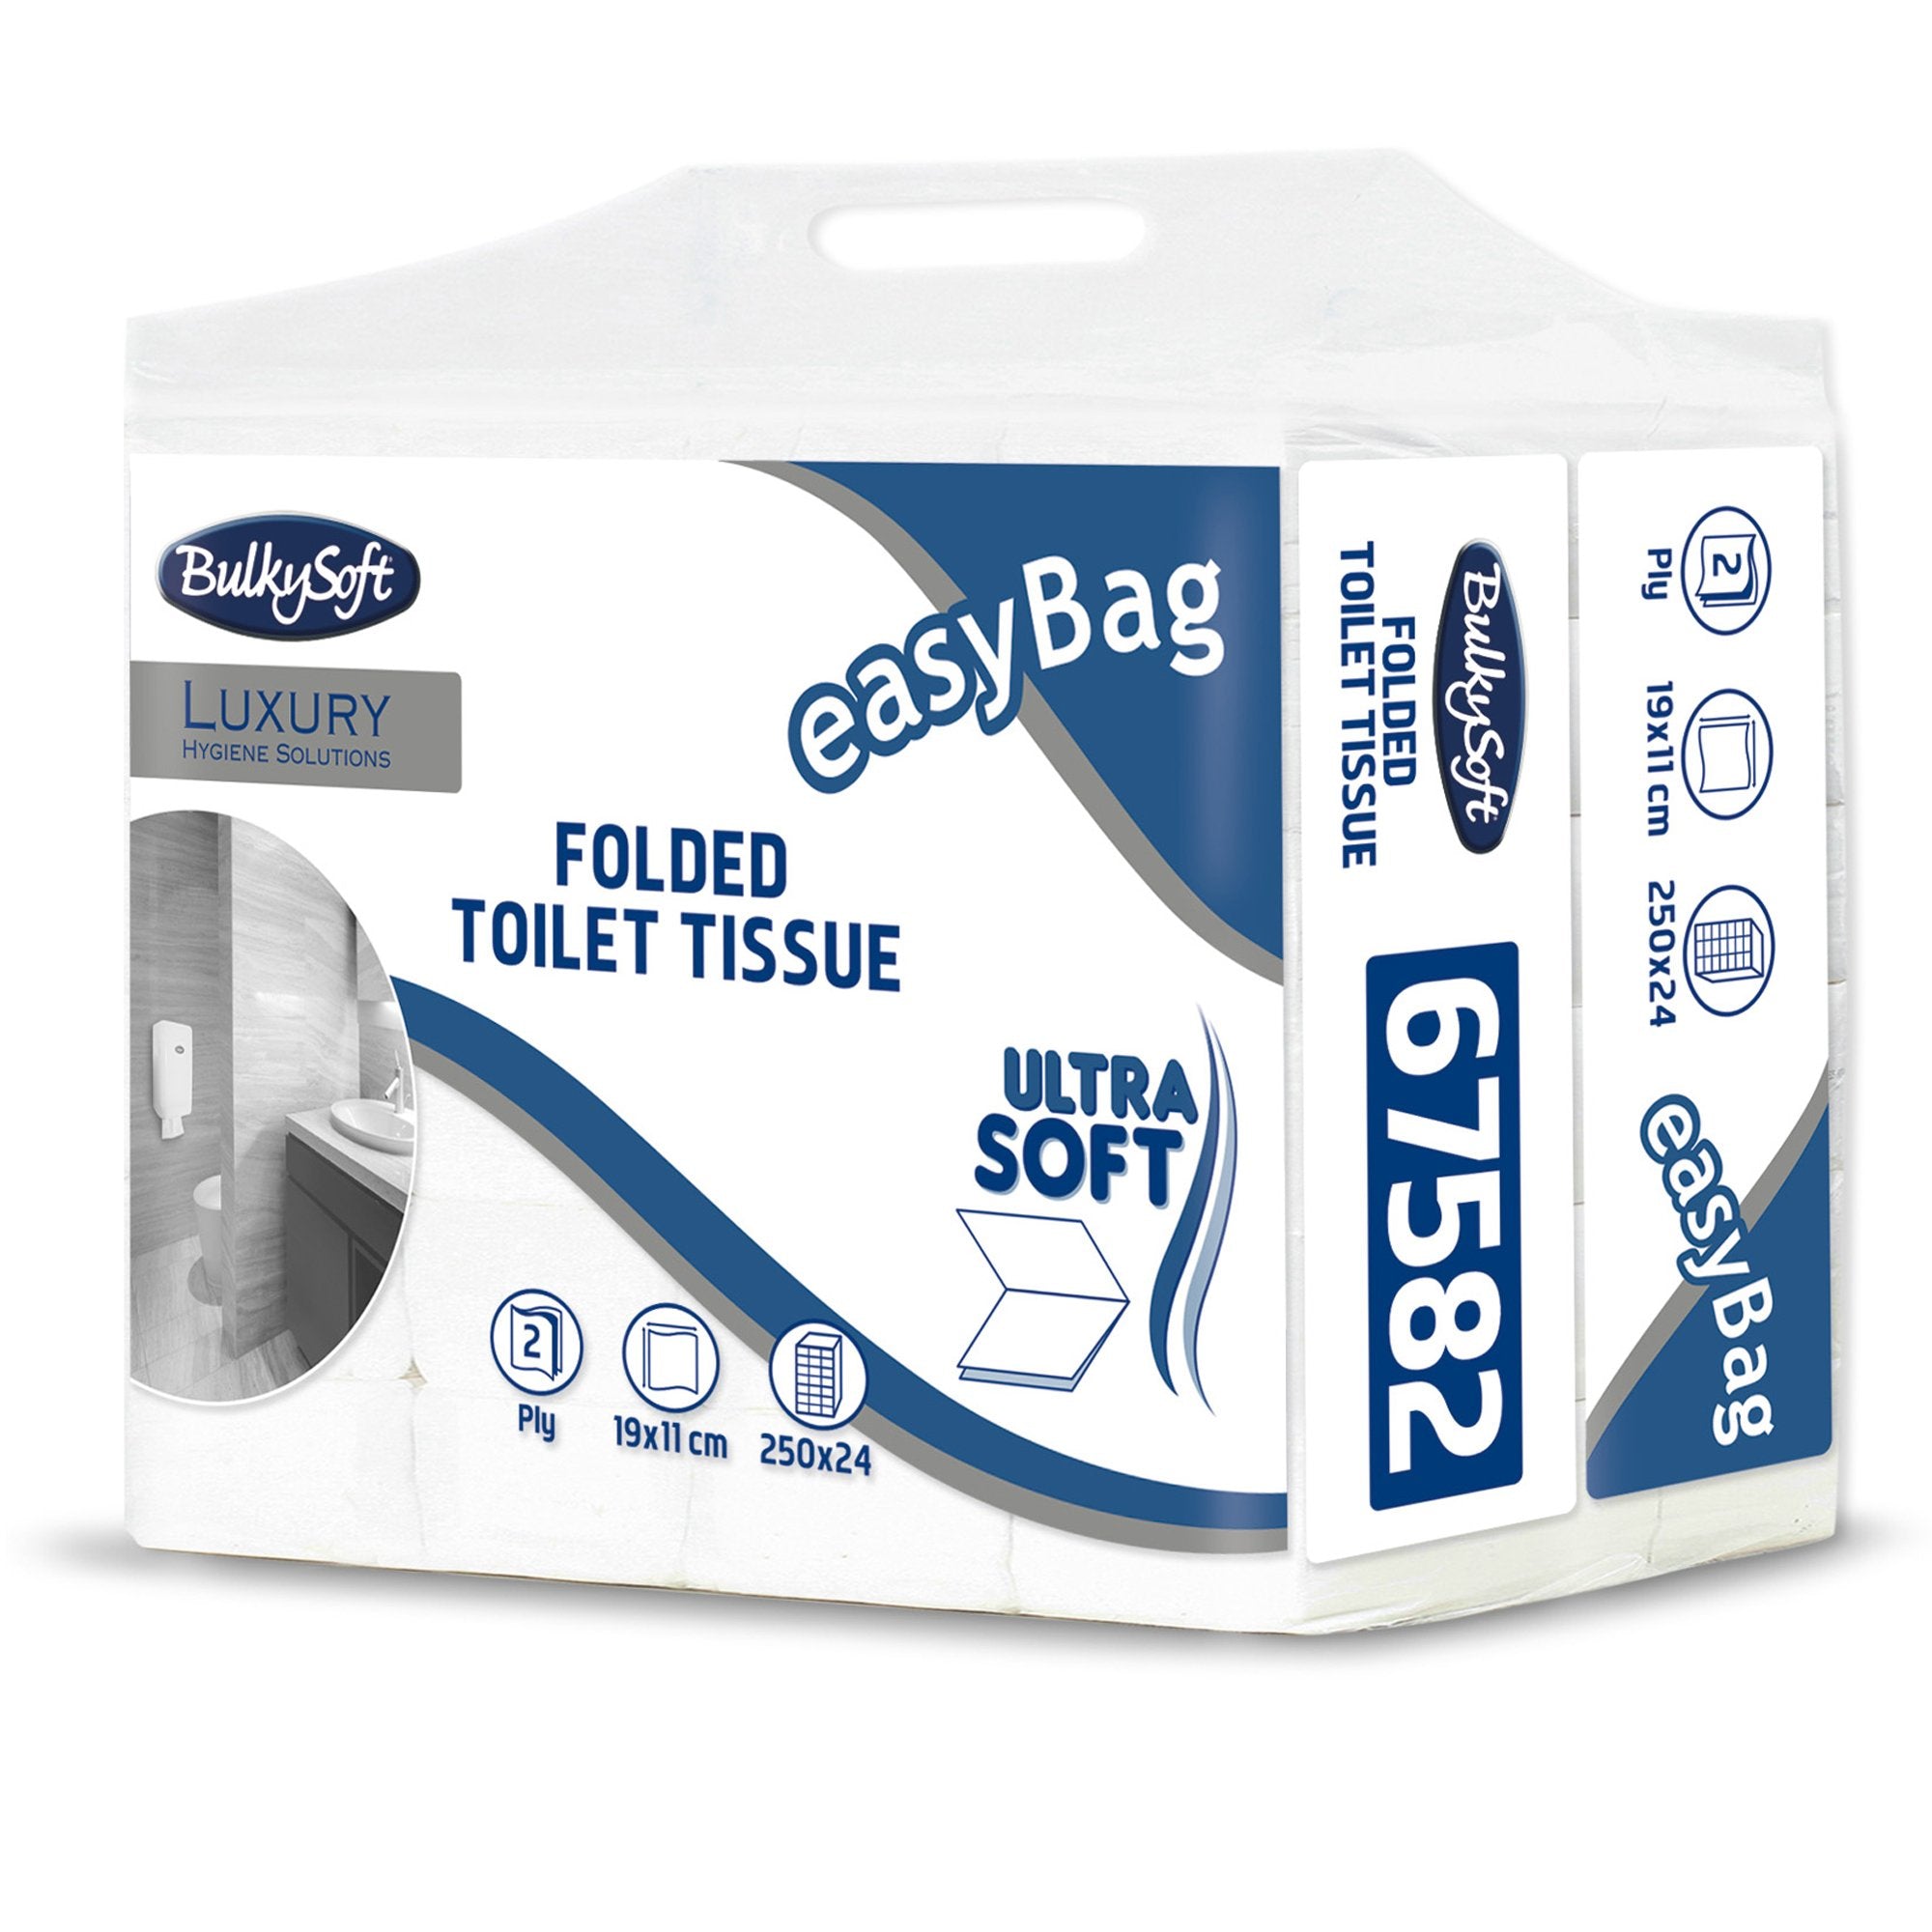 bulkysoft-pacco-250-strappi-carta-igienica-interfogliata-easybag